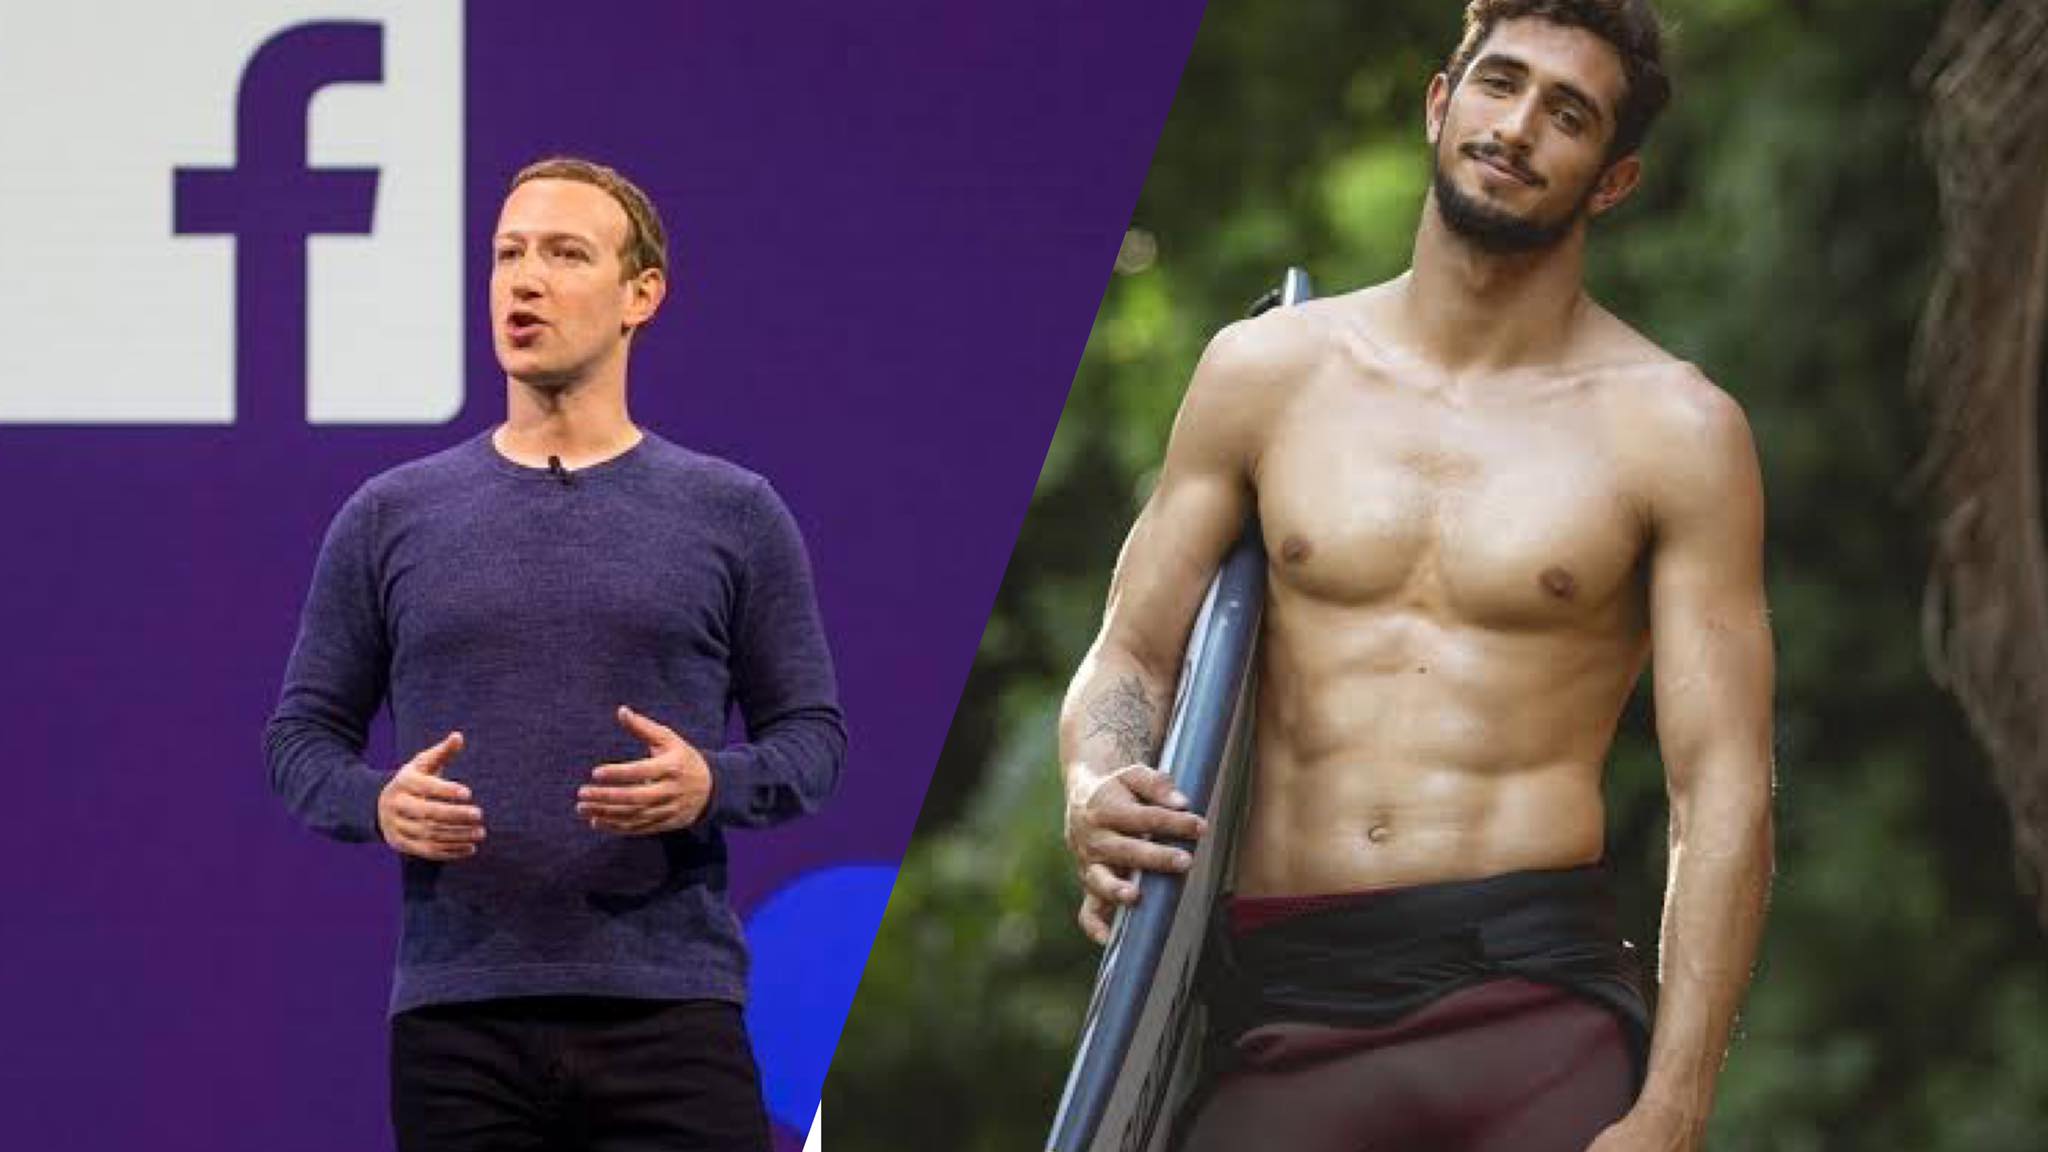 Lucas é seguido das redes pelo fãs famoso, Mark Zuckerberg criador do Facebook (montagem: Fashion Bubbles)